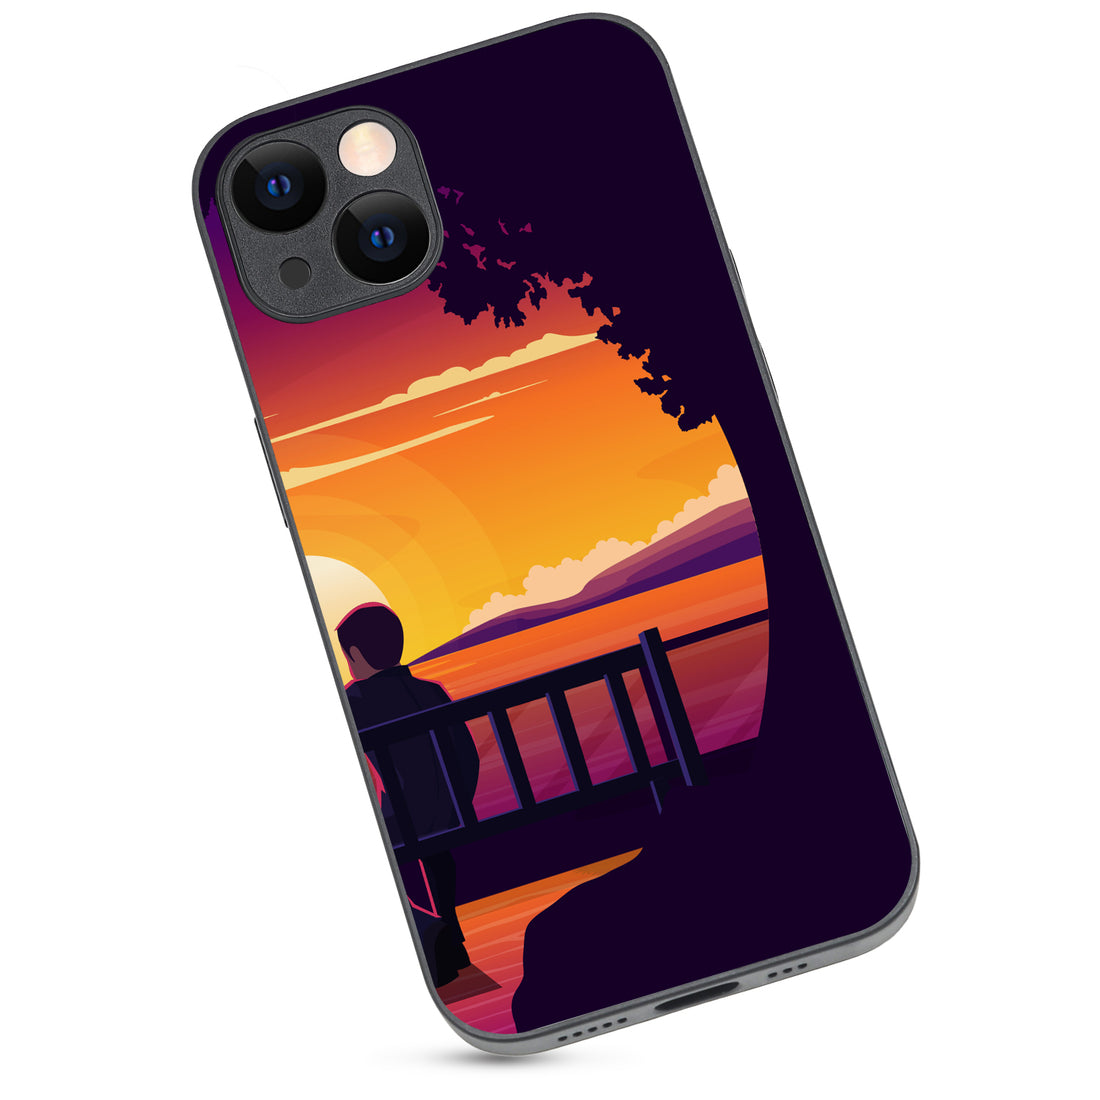 Sunset Date Boy Couple iPhone 13 Case